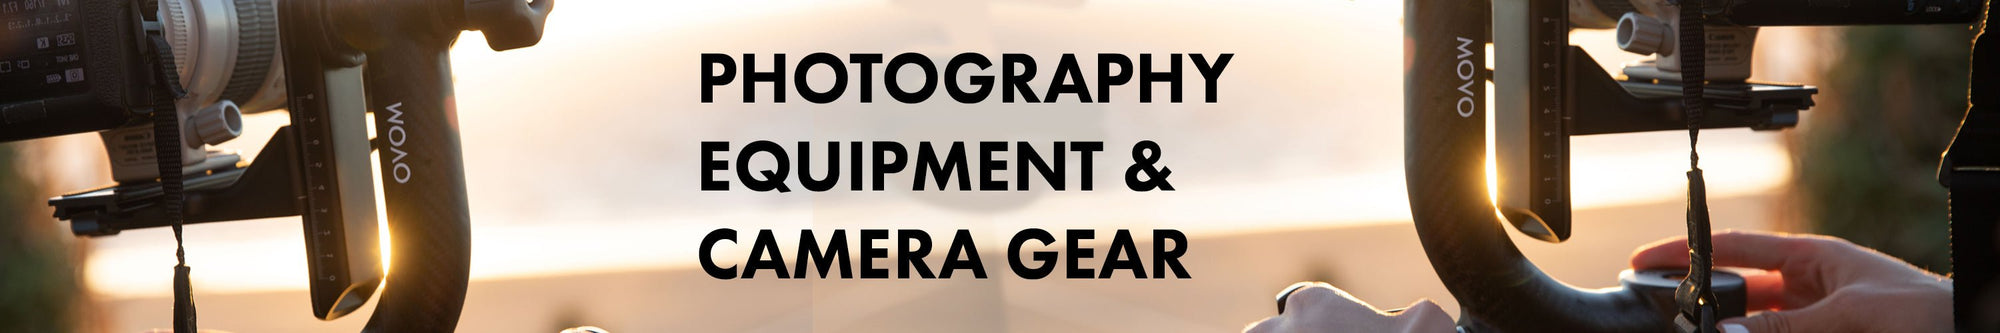 Photography Equipment & Camera Gear